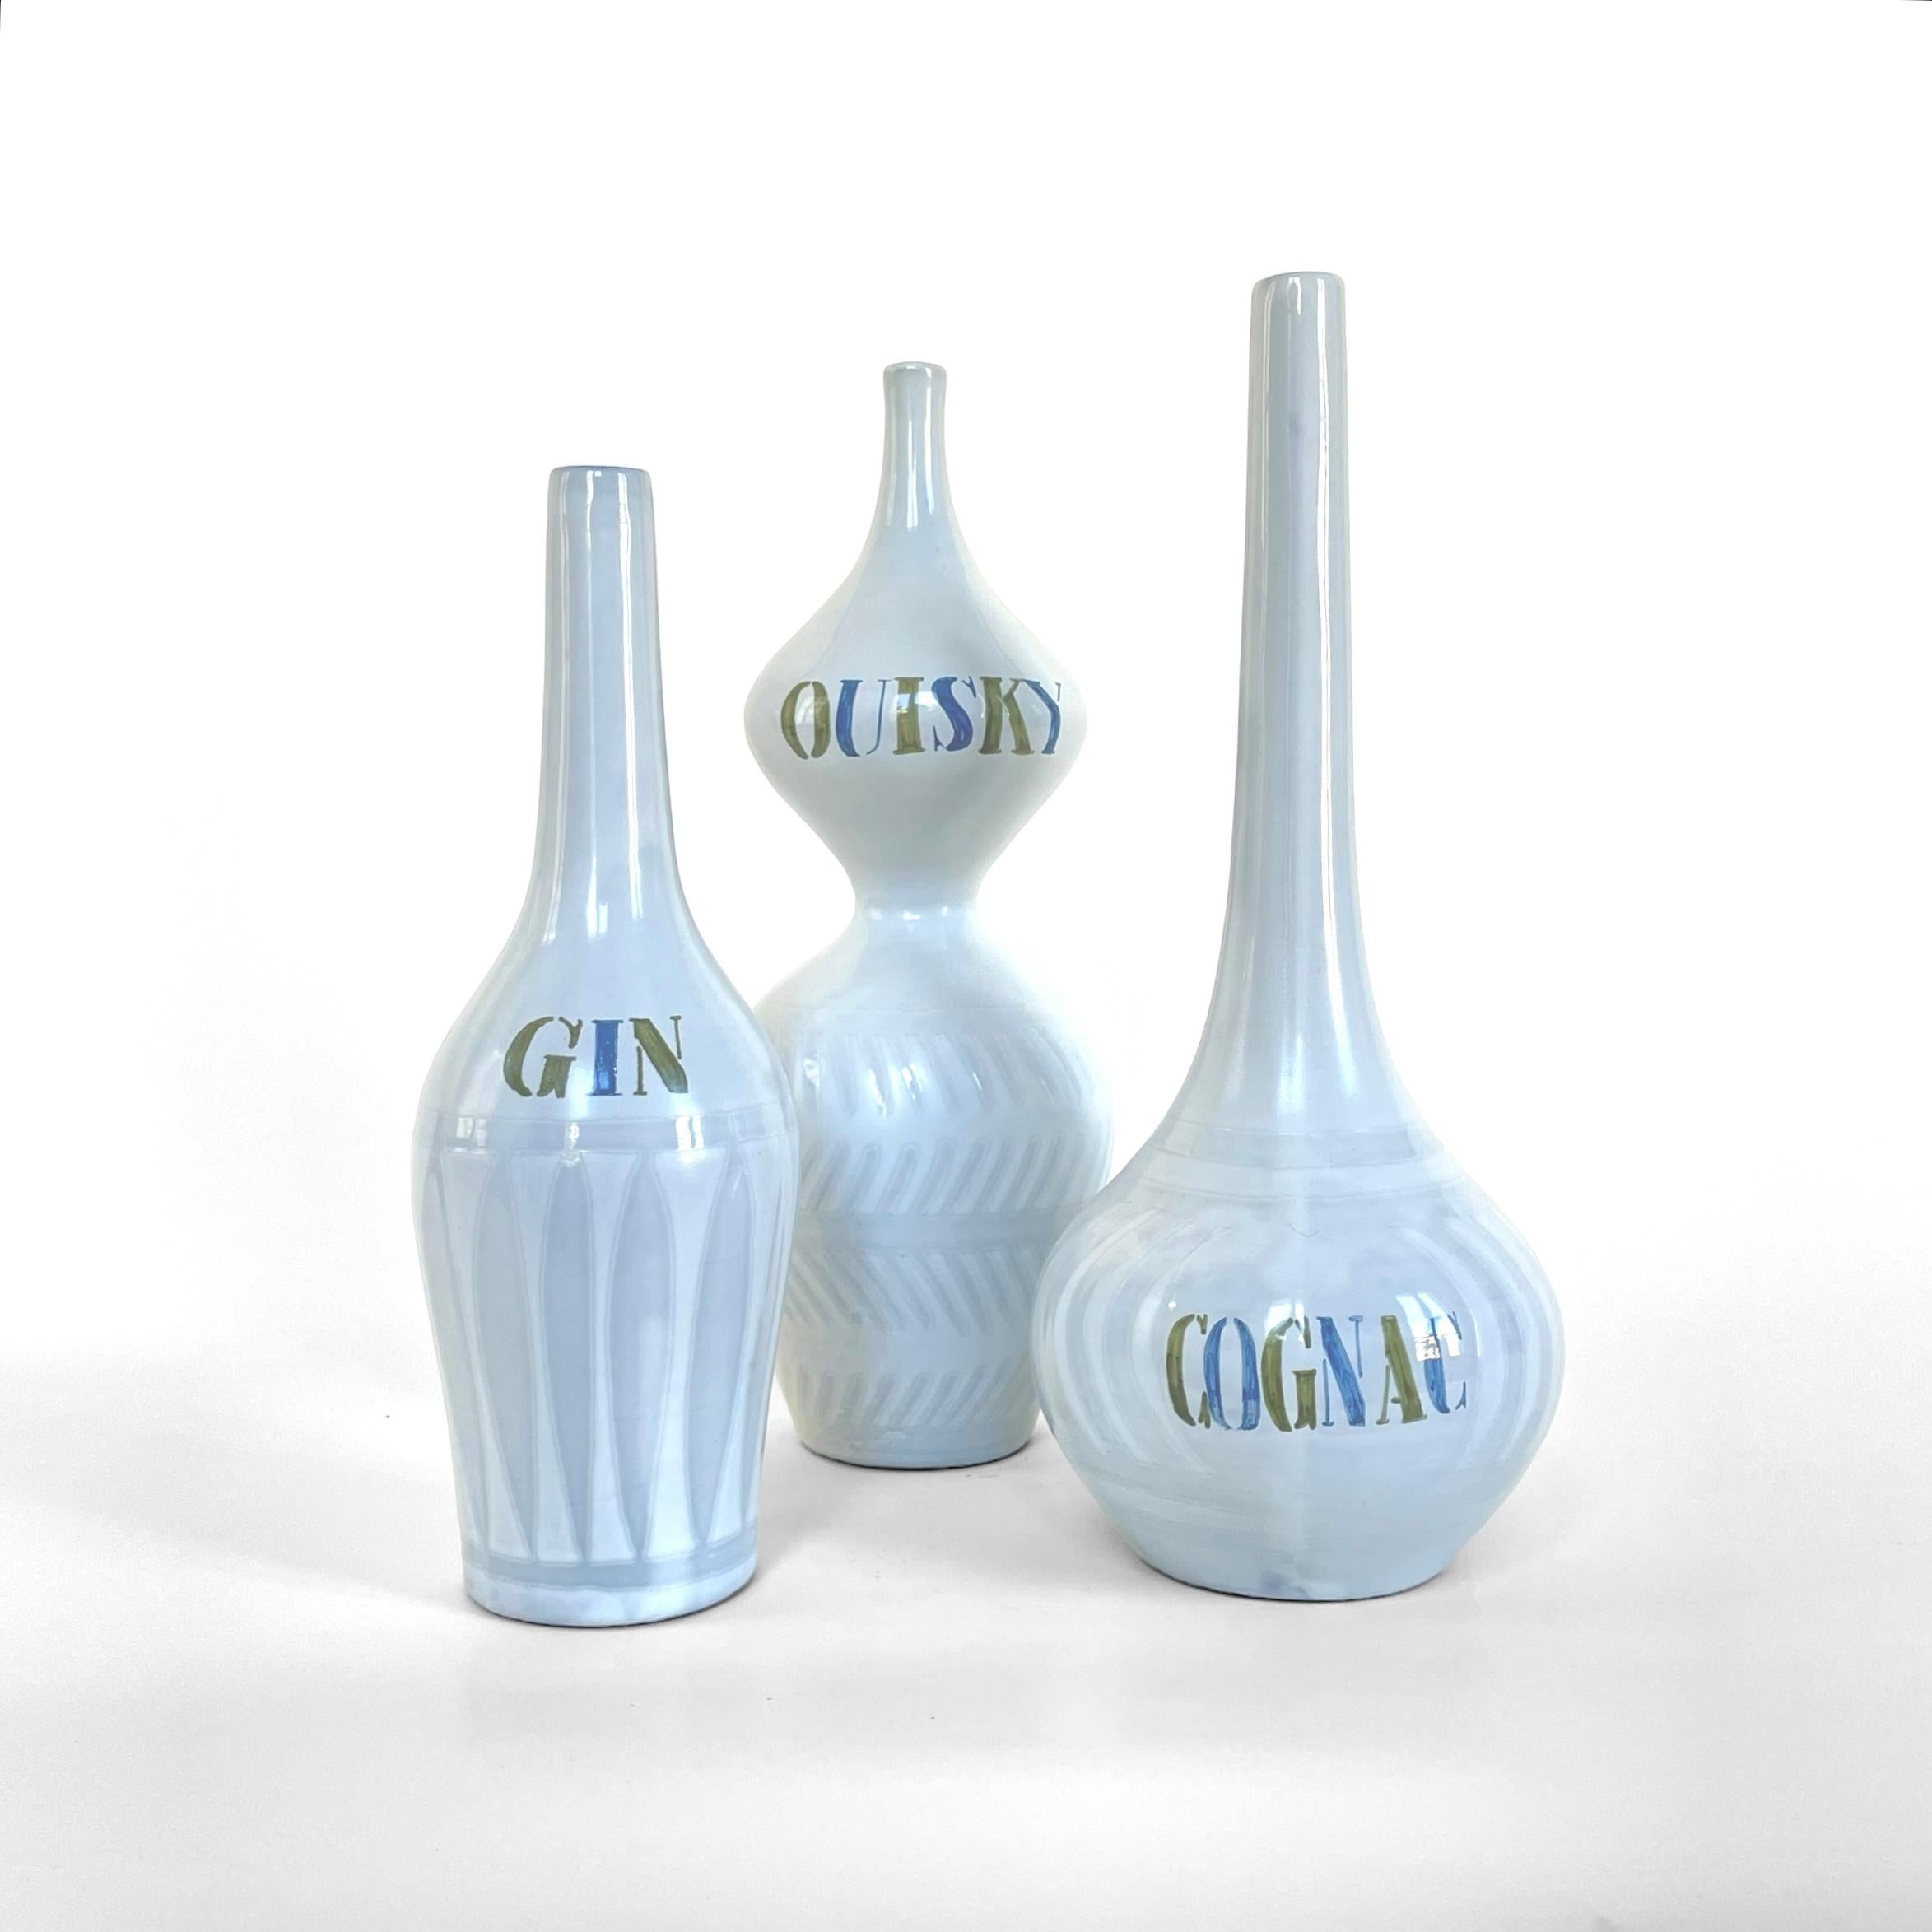 Set of 3 ceramic alcohol bottles by roger capron, vallauris, circa 1960. 
Bottle 